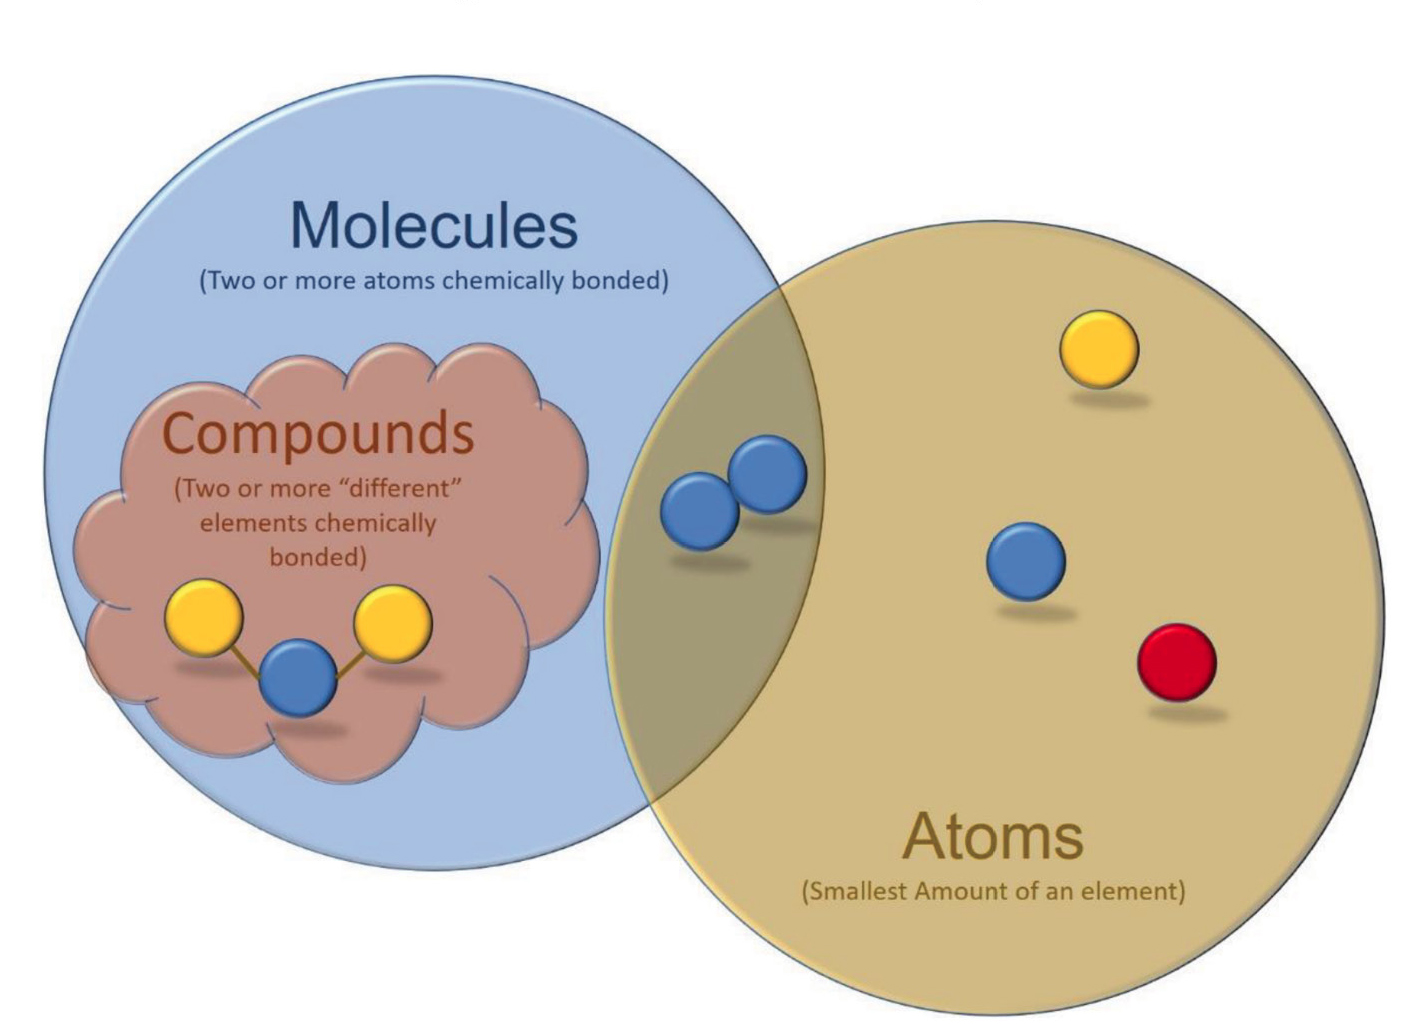 Venn diagram for molecules, compounds, and atoms.